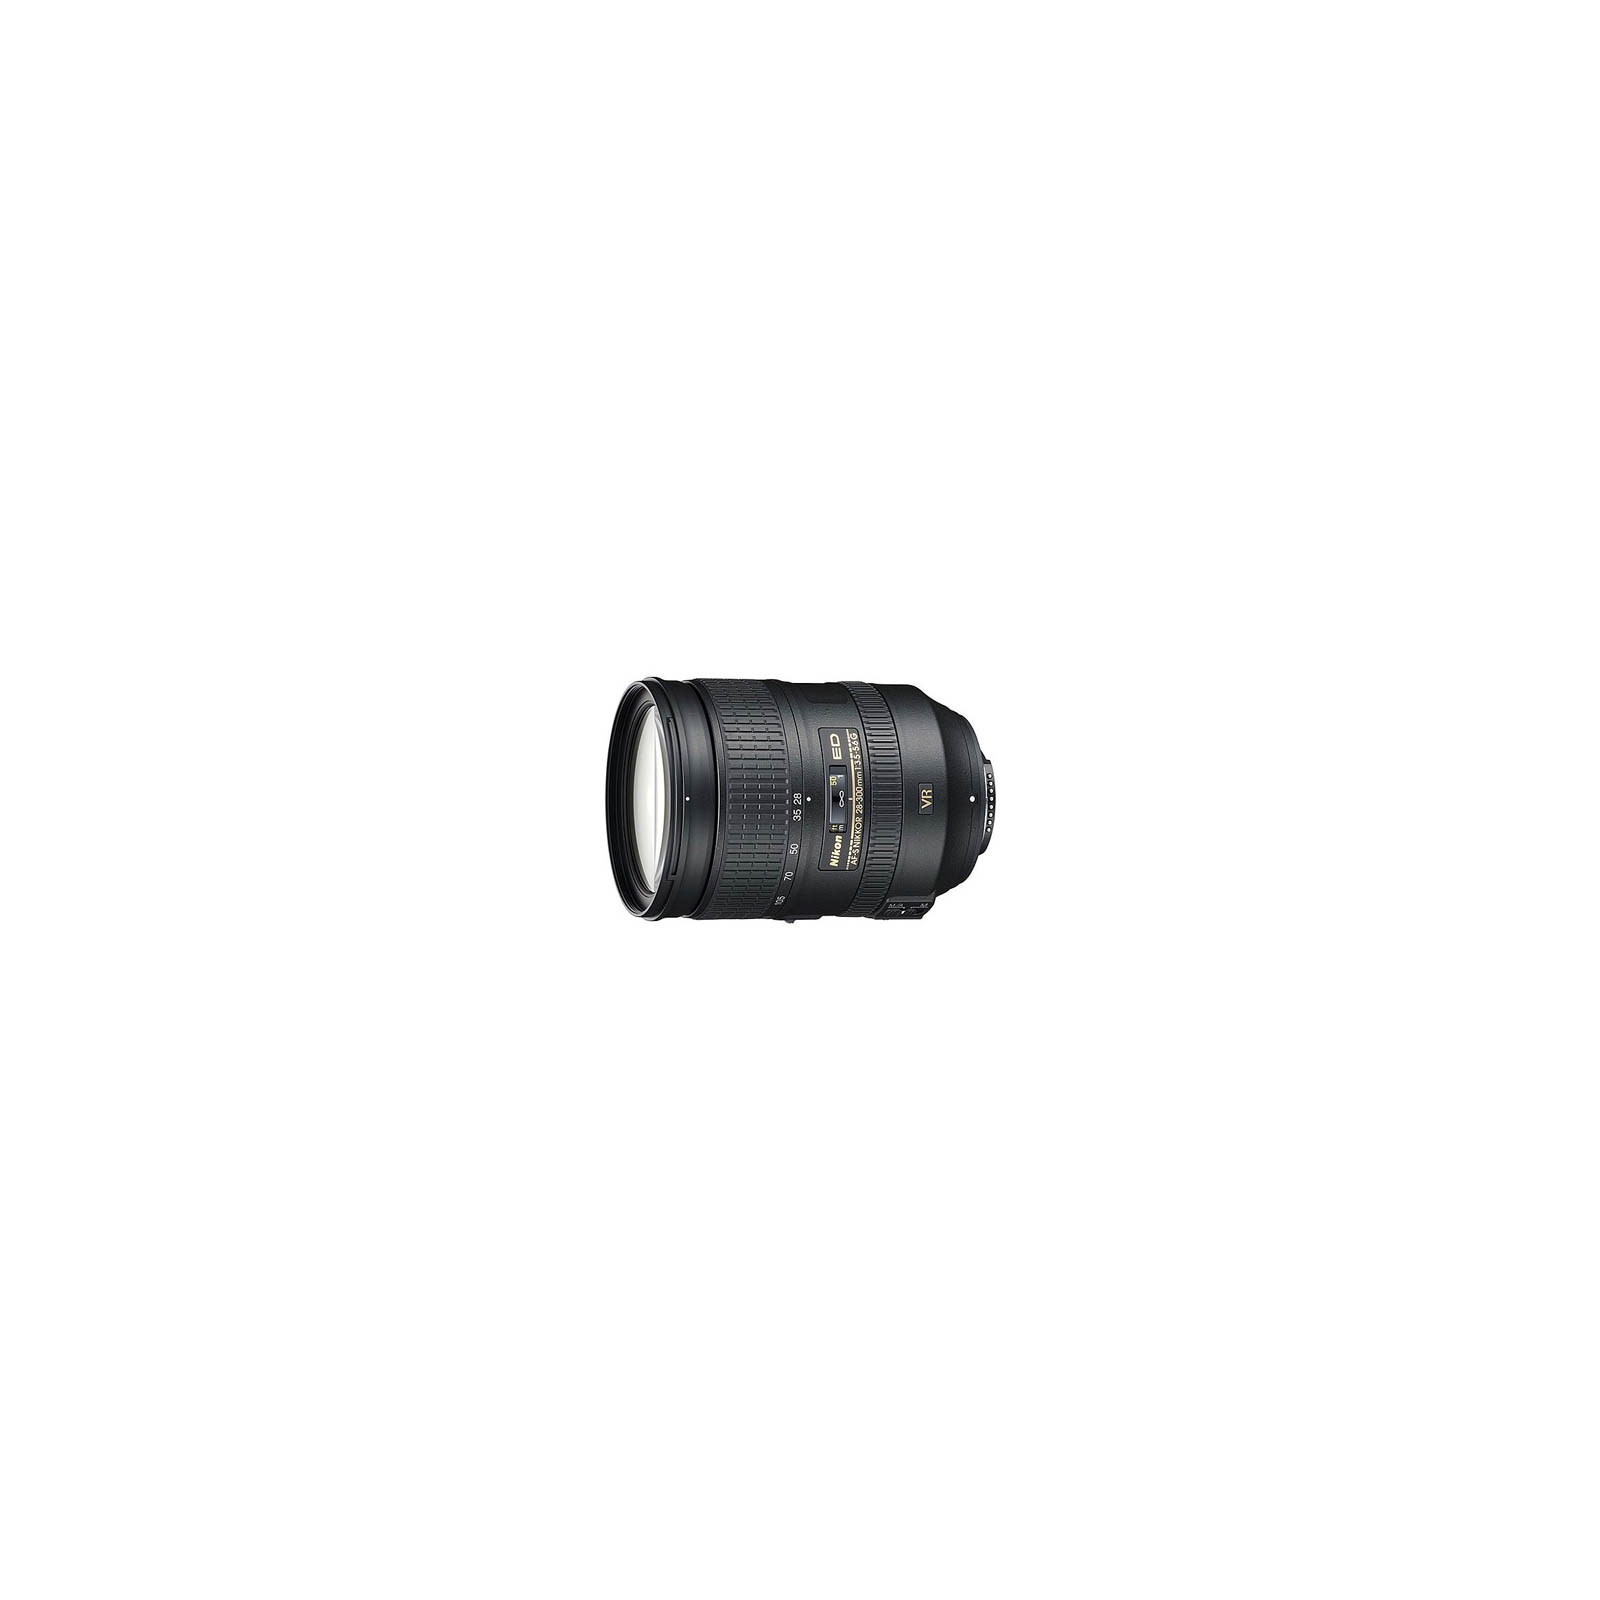 Объектив Nikon AF-S 28-300mm f/3.5-5.6G ED VR (JAA808DA)